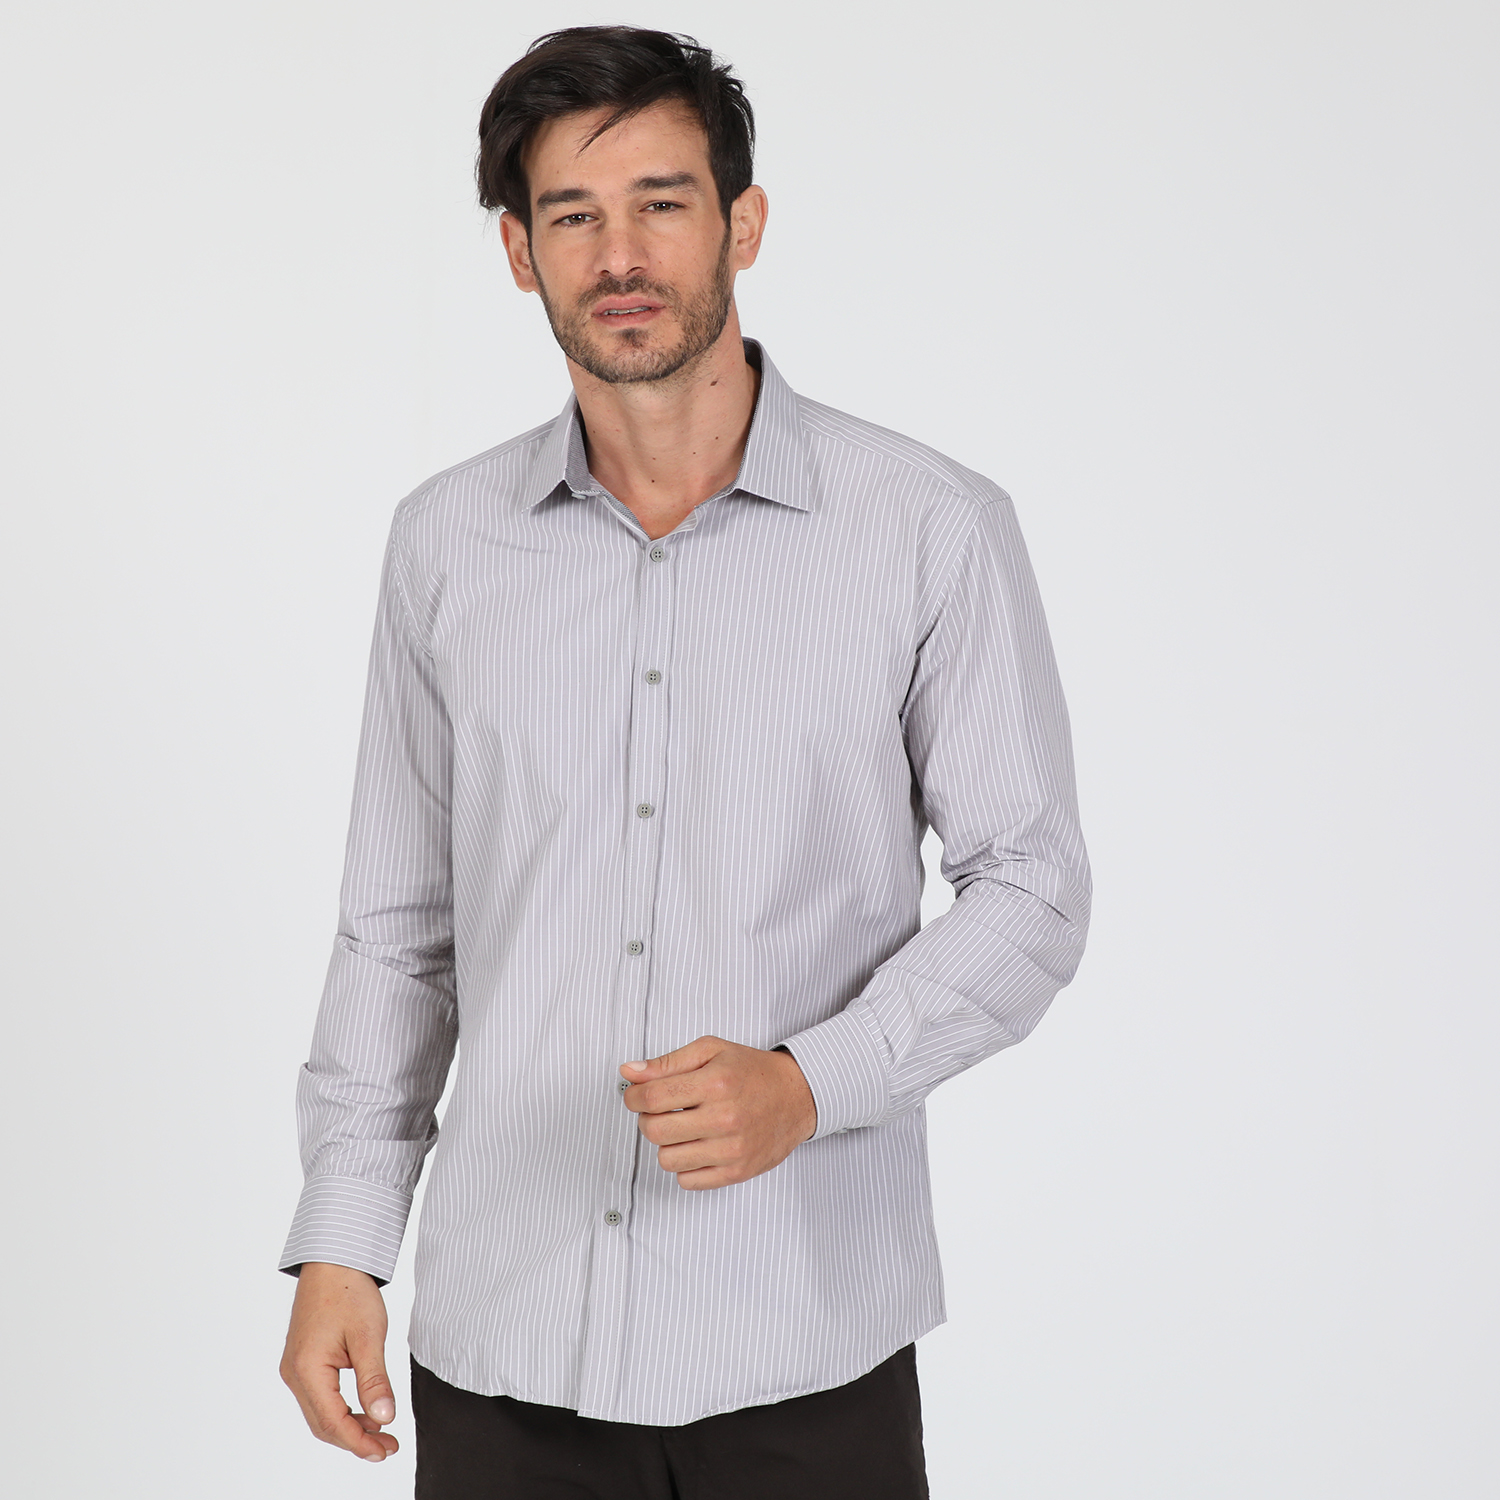 MARTIN & CO MARTIN & CO - Ανδρικό πουκάμισο MARTIN & CO SLIM FIT γκρι λευκό